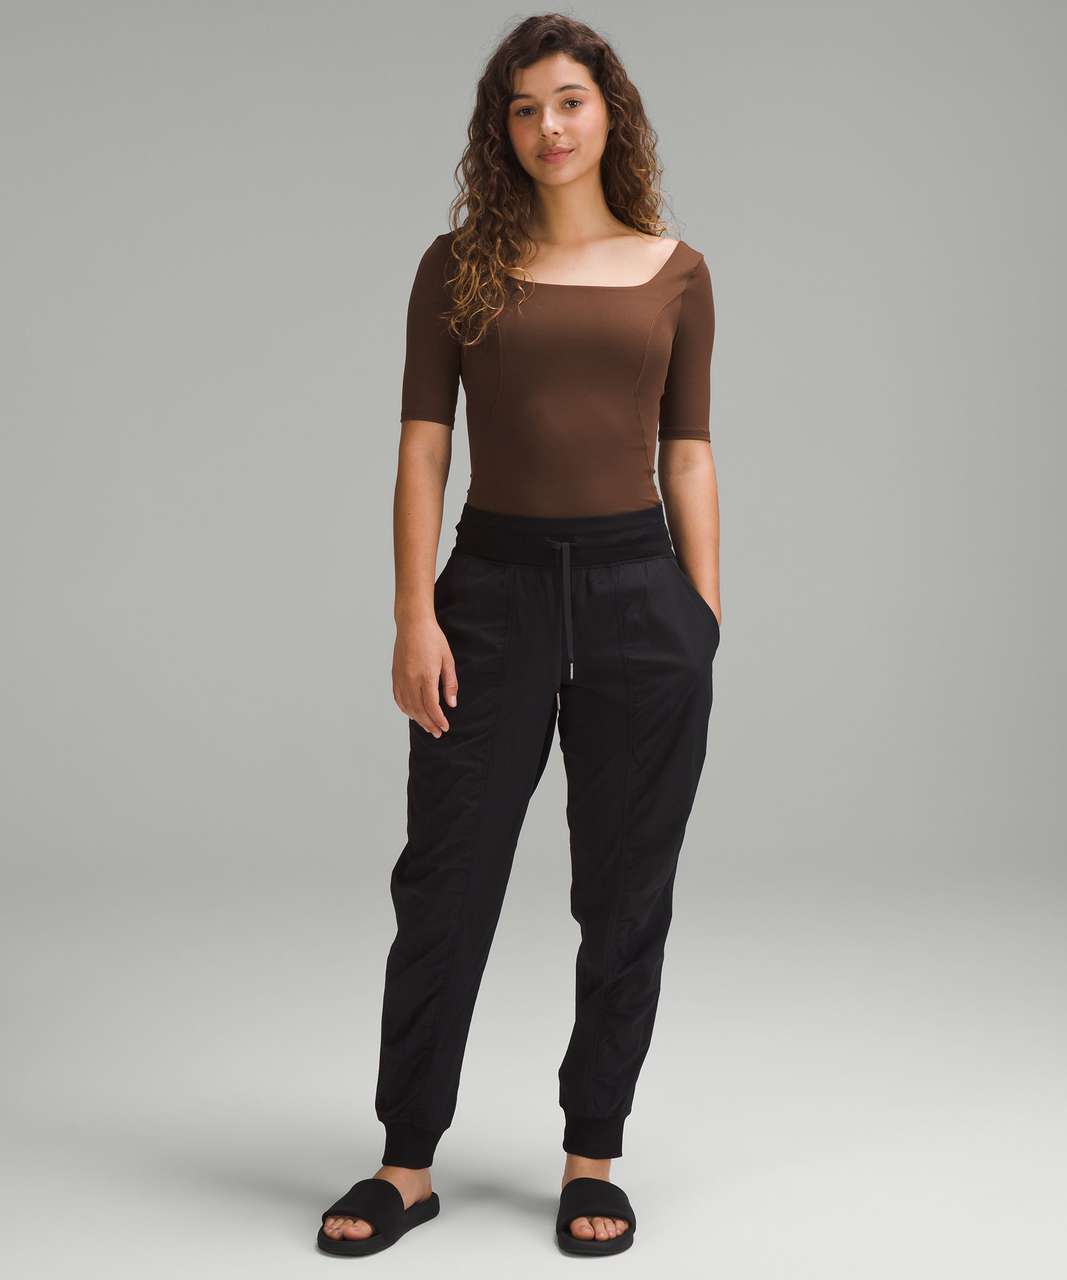 Lululemon Half-Sleeve Close-to-Body Shelf T-Shirt - Java